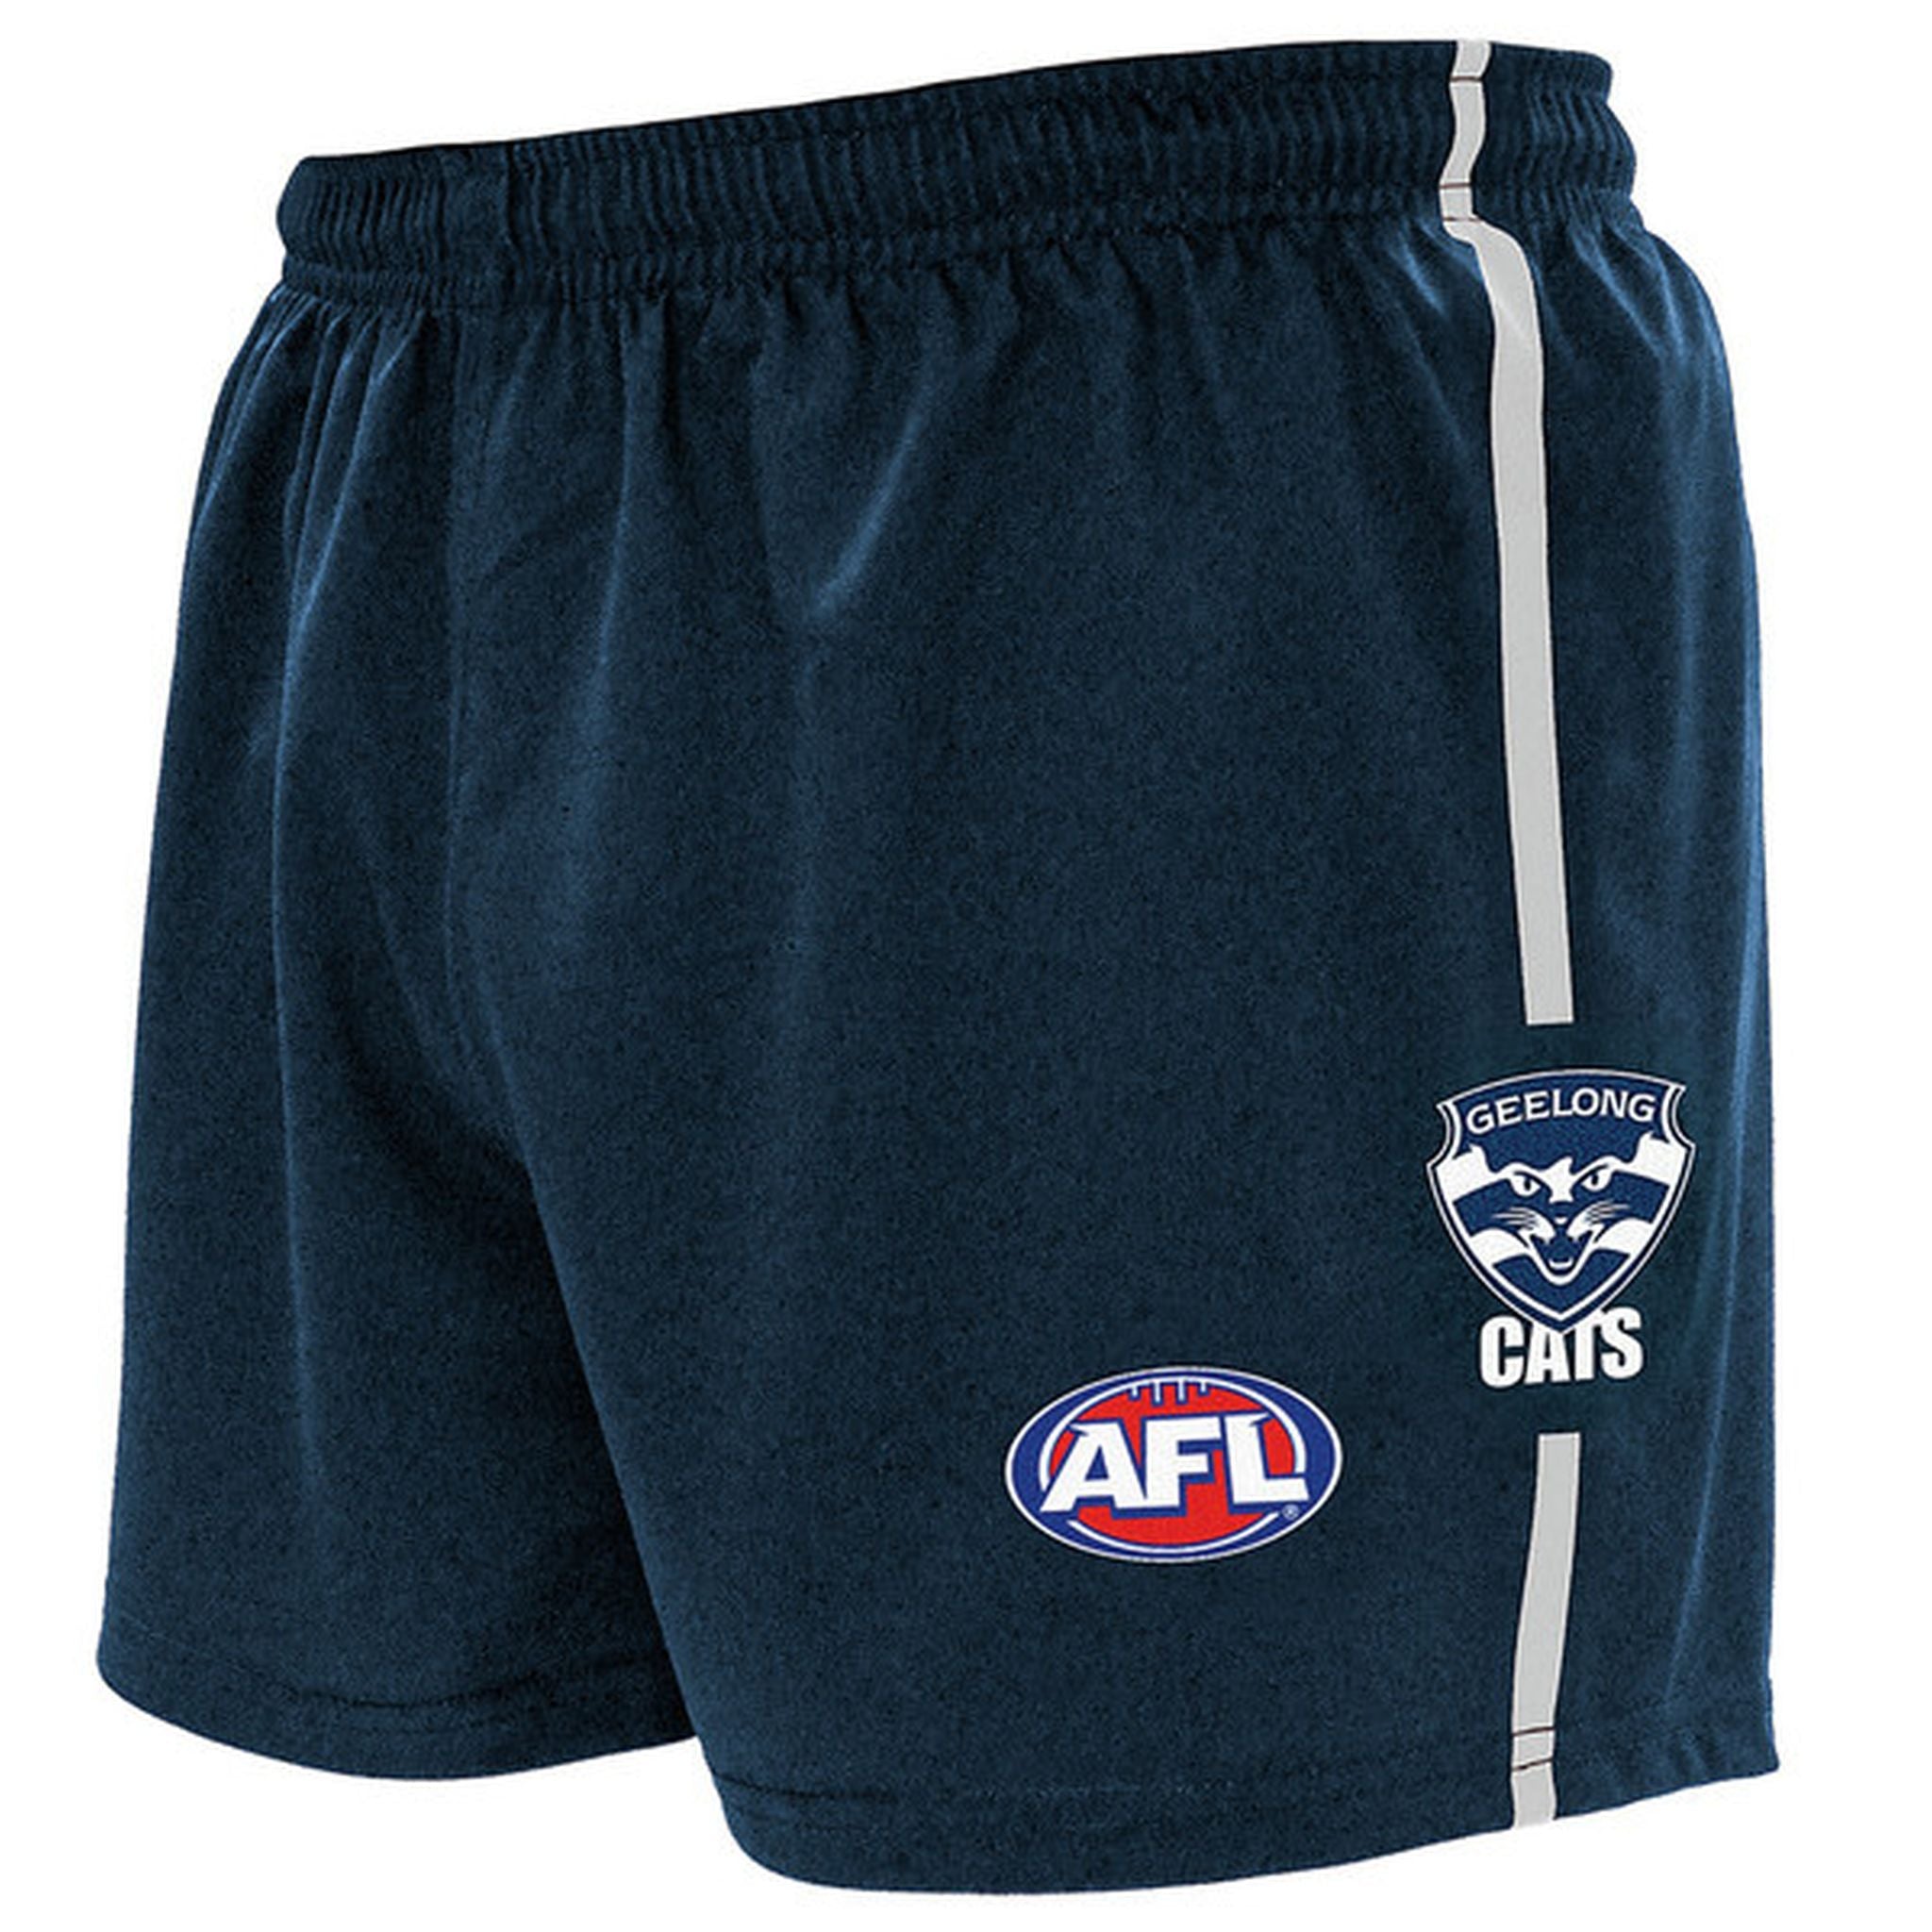 Burley Geelong Cats AFL Replica Adults Shorts